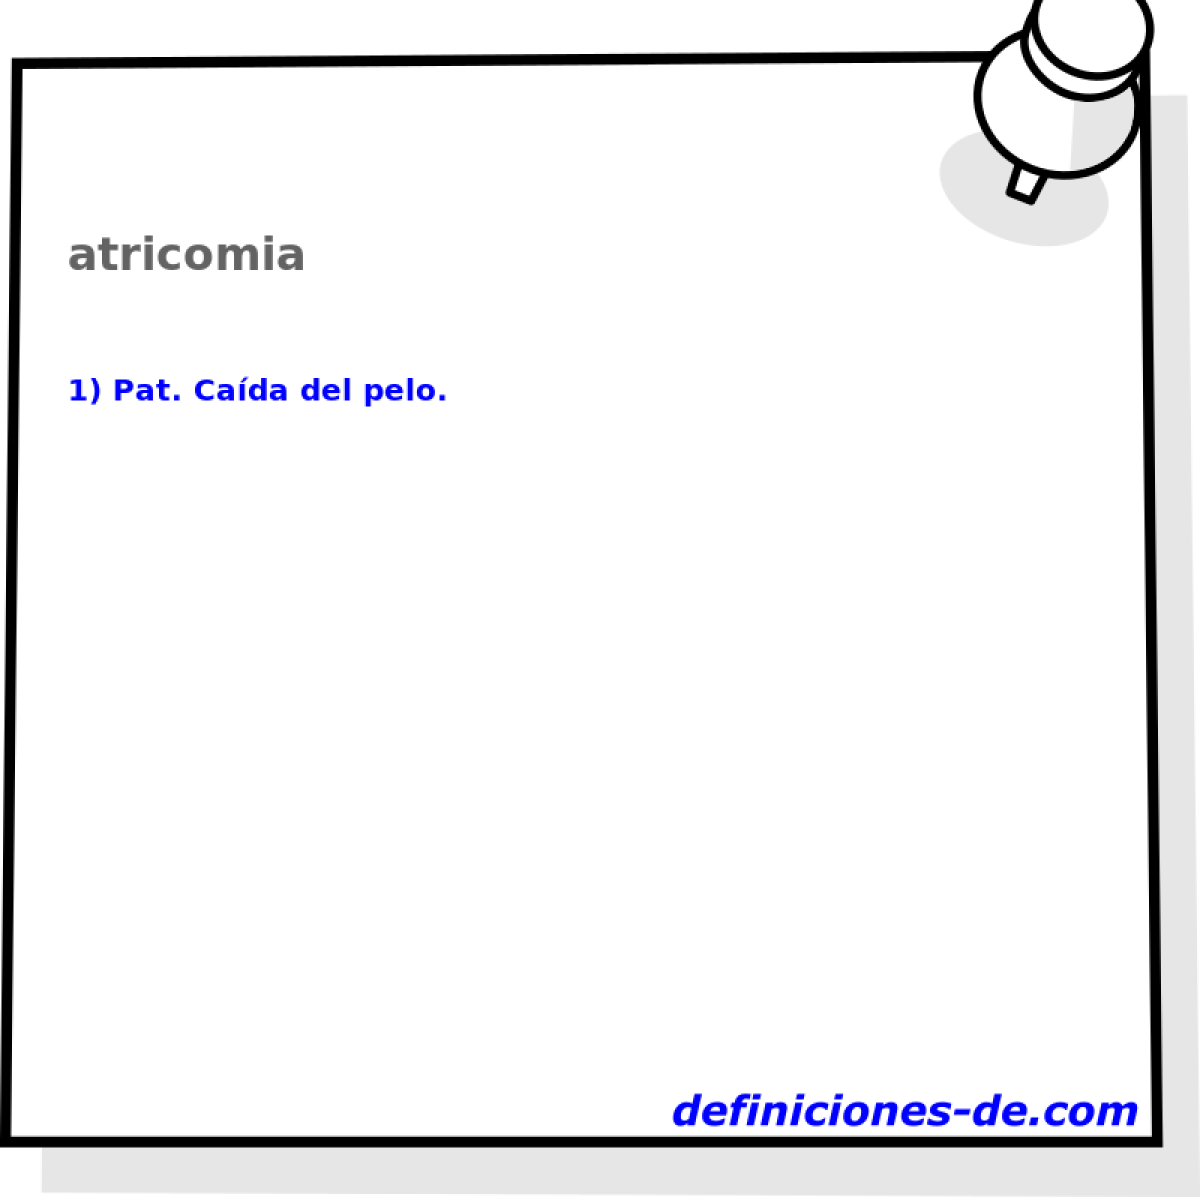 atricomia 